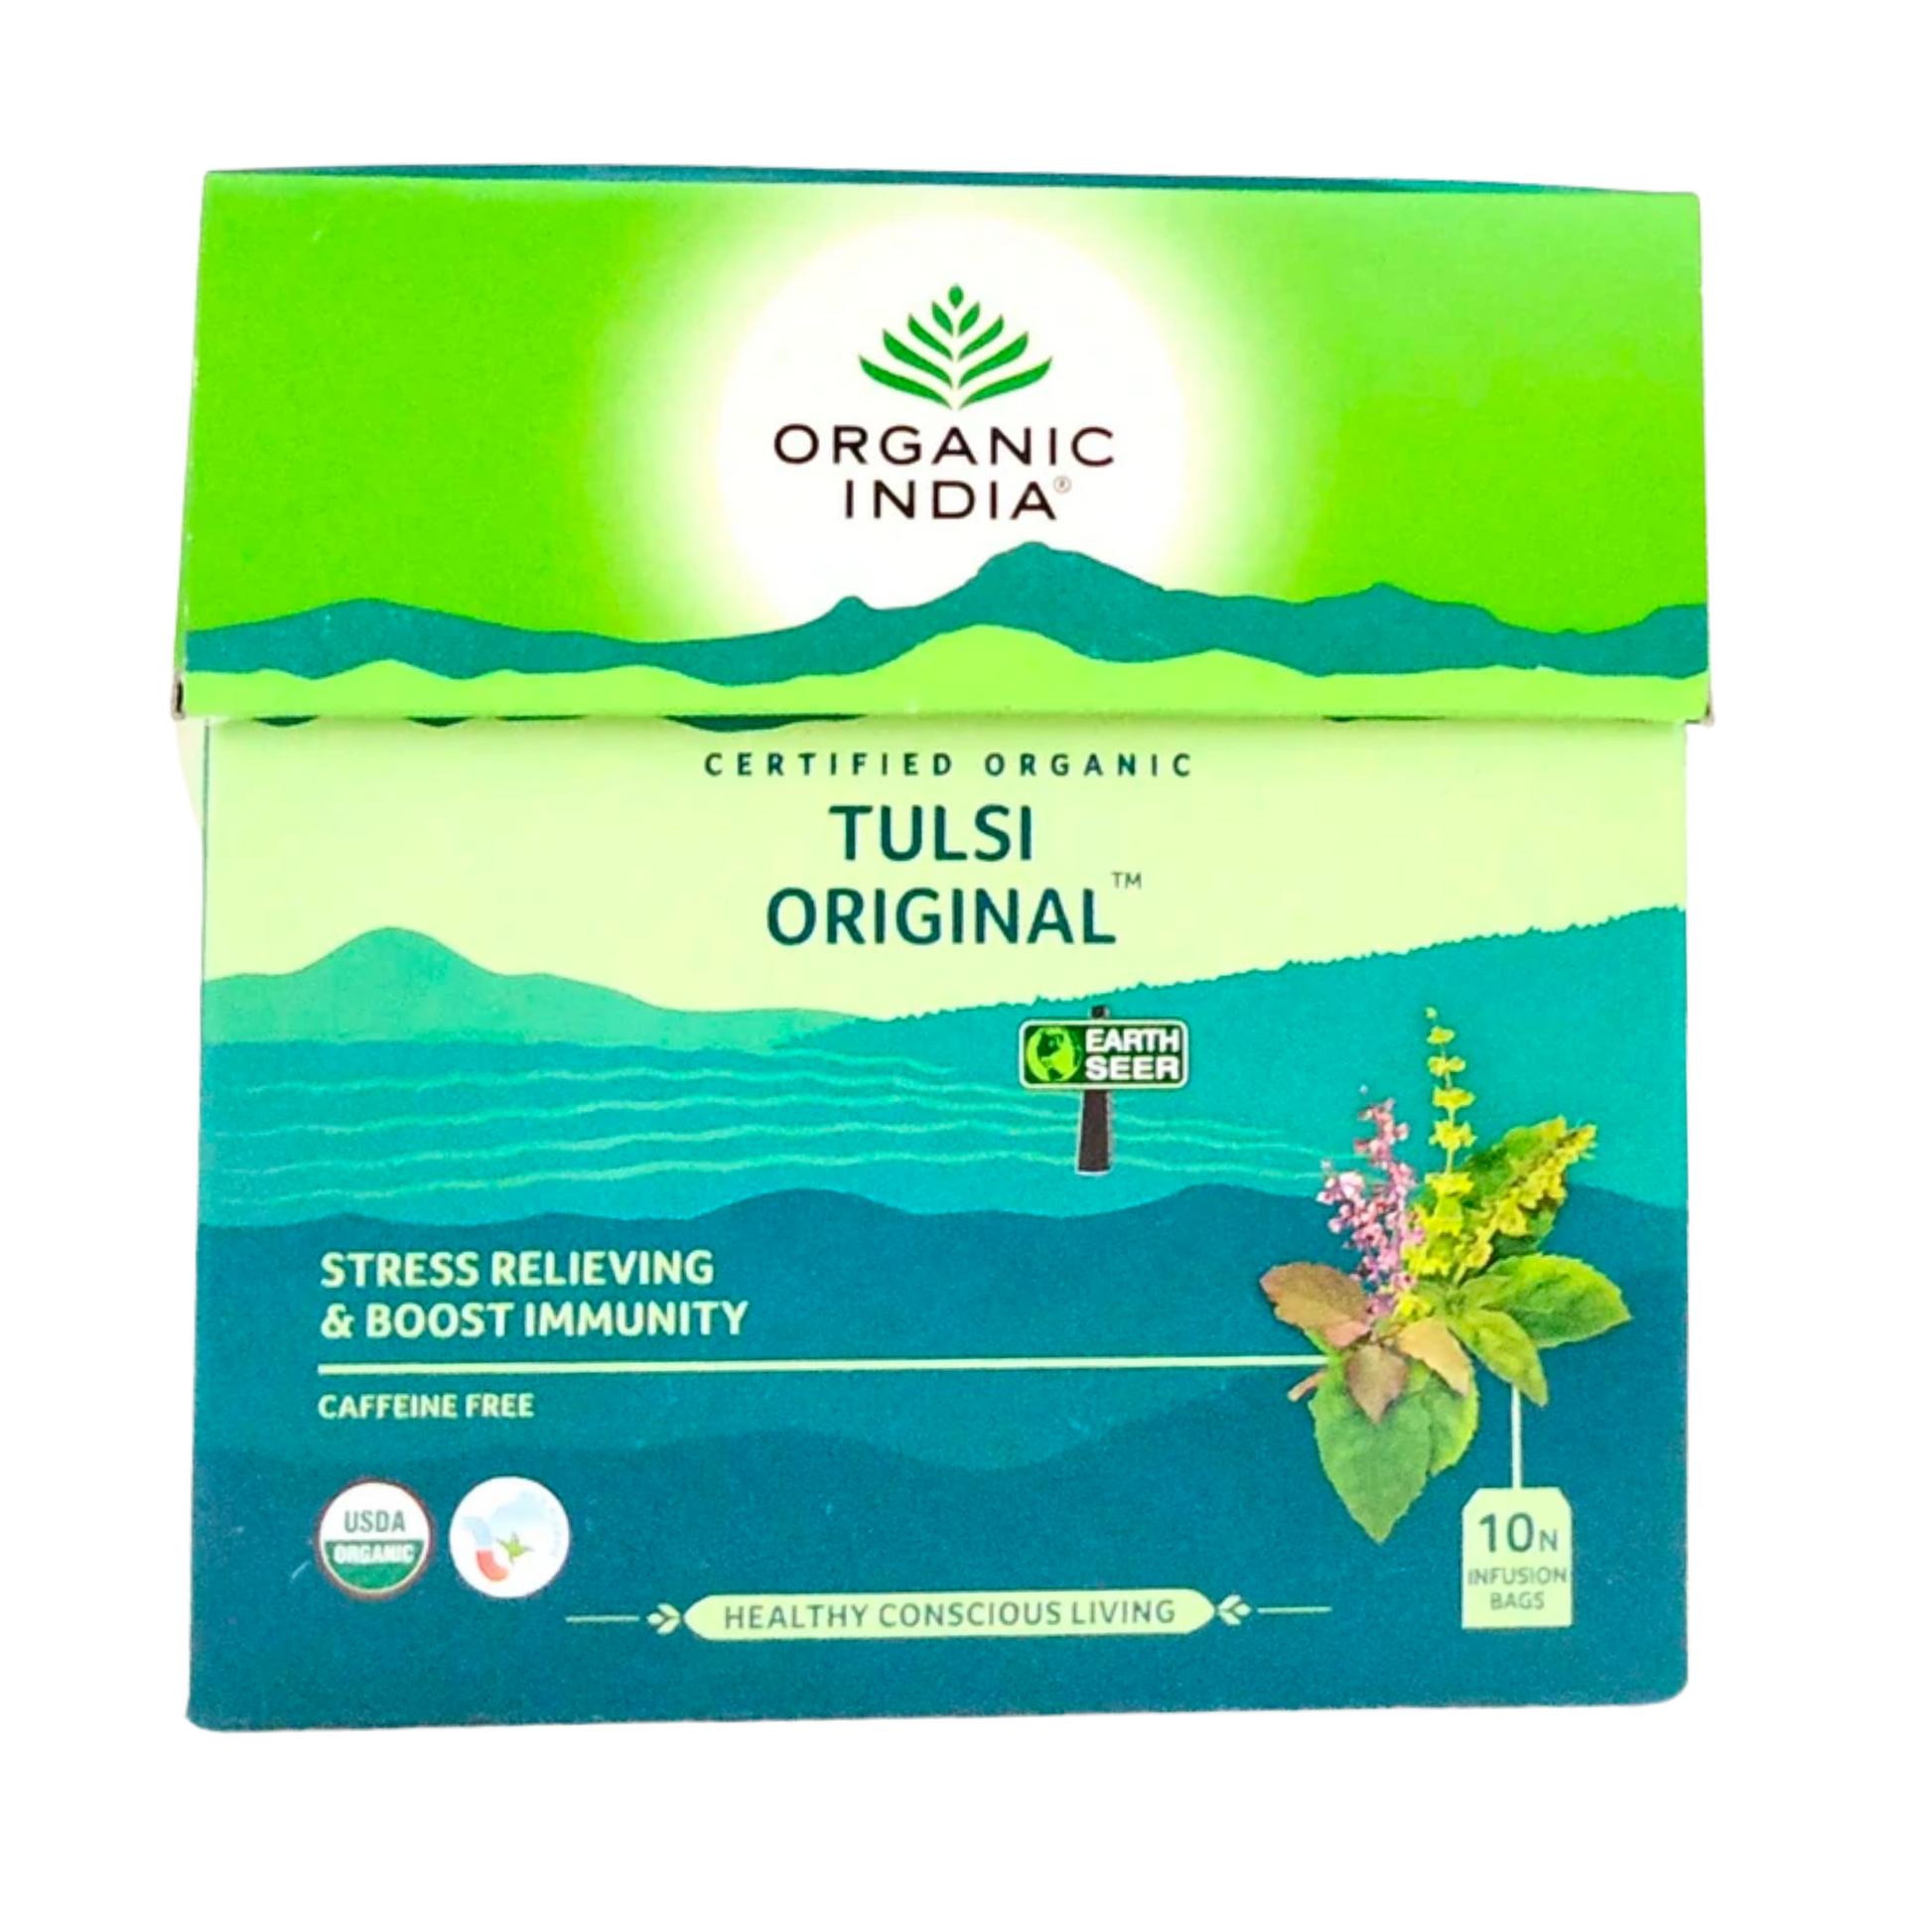 Shop Organic India Tulsi Original Green Tea - 10 Sachets at price 64.00 from Organic India Online - Ayush Care